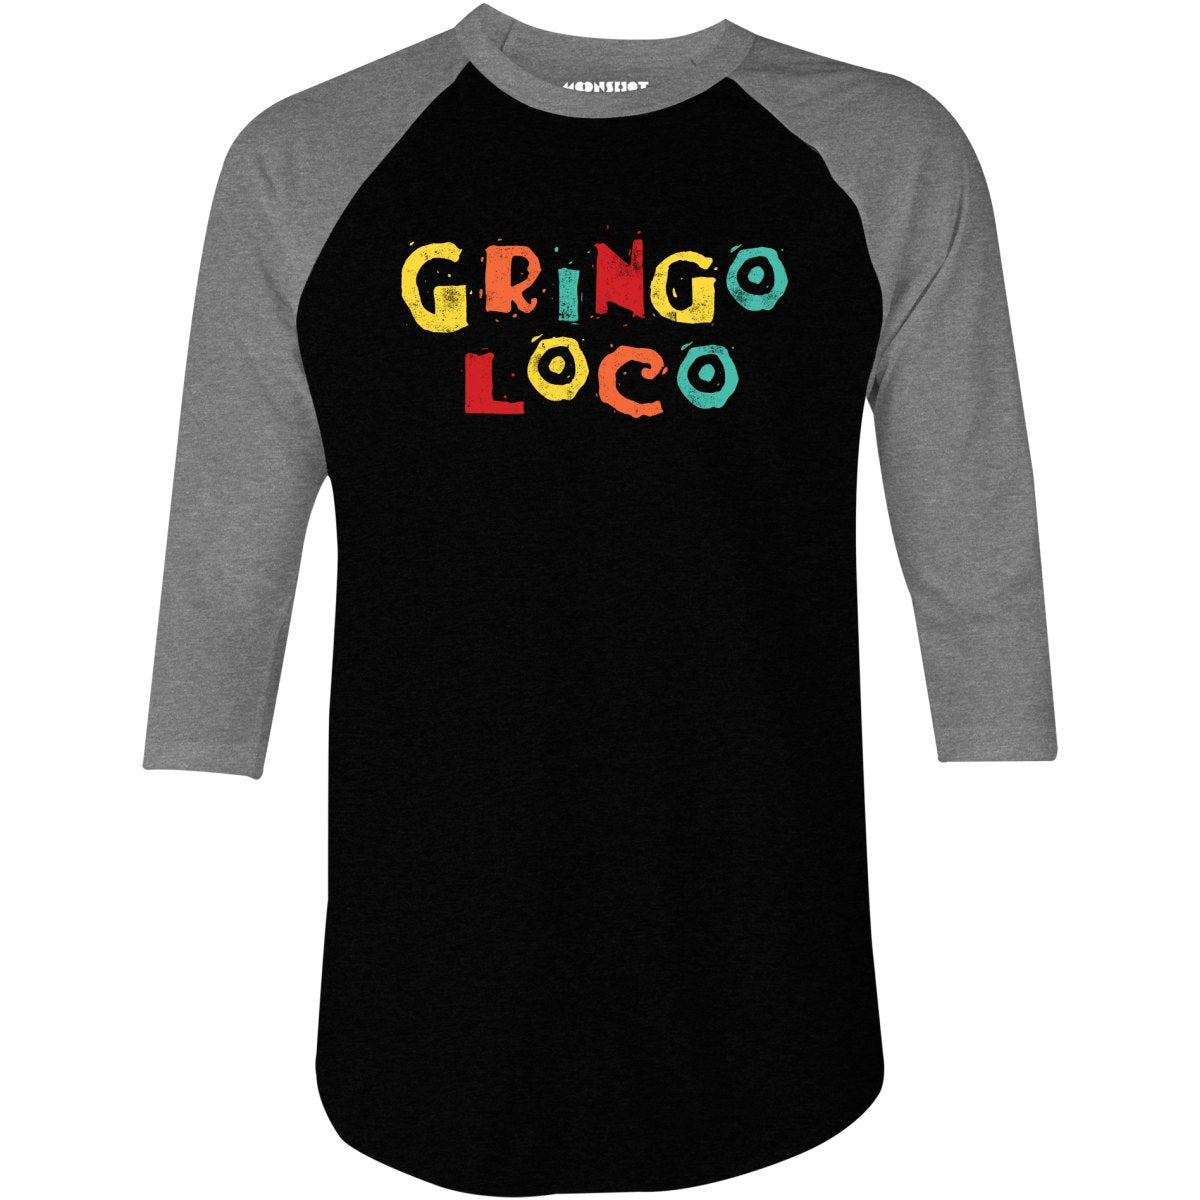 Gringo Loco - 3/4 Sleeve Raglan T-Shirt